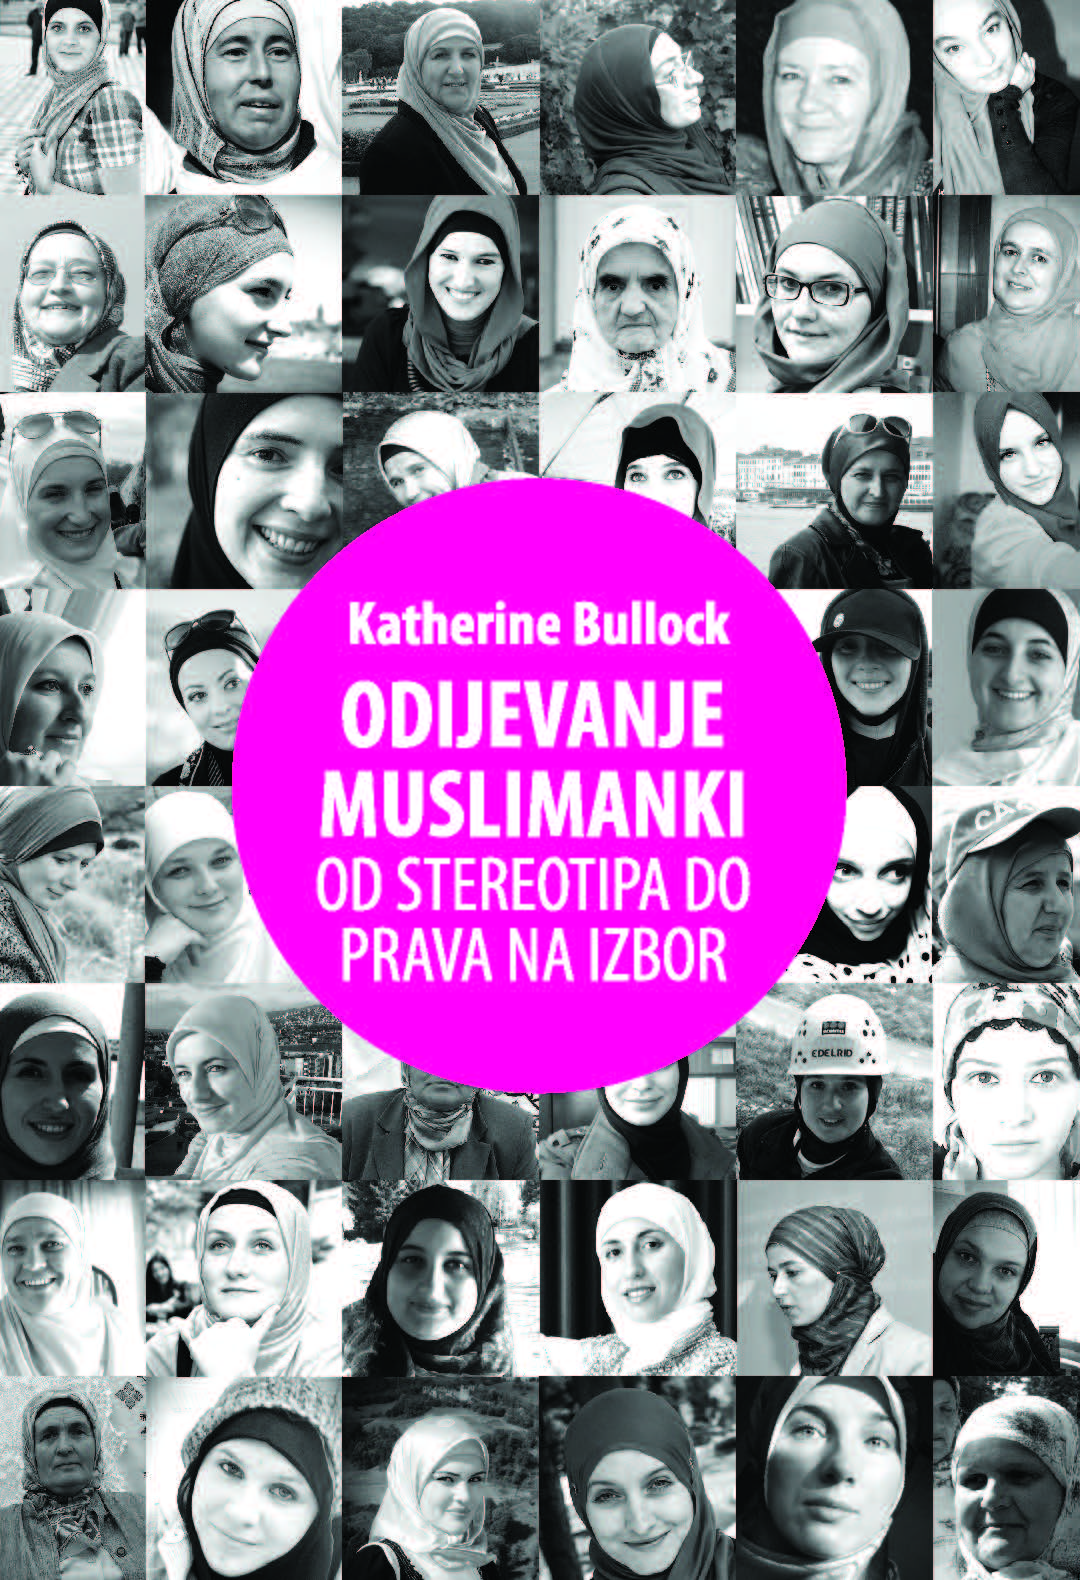 (Bosnian Language) ODIJEVANJE MUSLIMANKI OD STEREOTIPA DO PRAVA NA IZBOR (Rethinking Muslim Women and the Veil: Challenging Historical & Modern ‎Stereotypes)